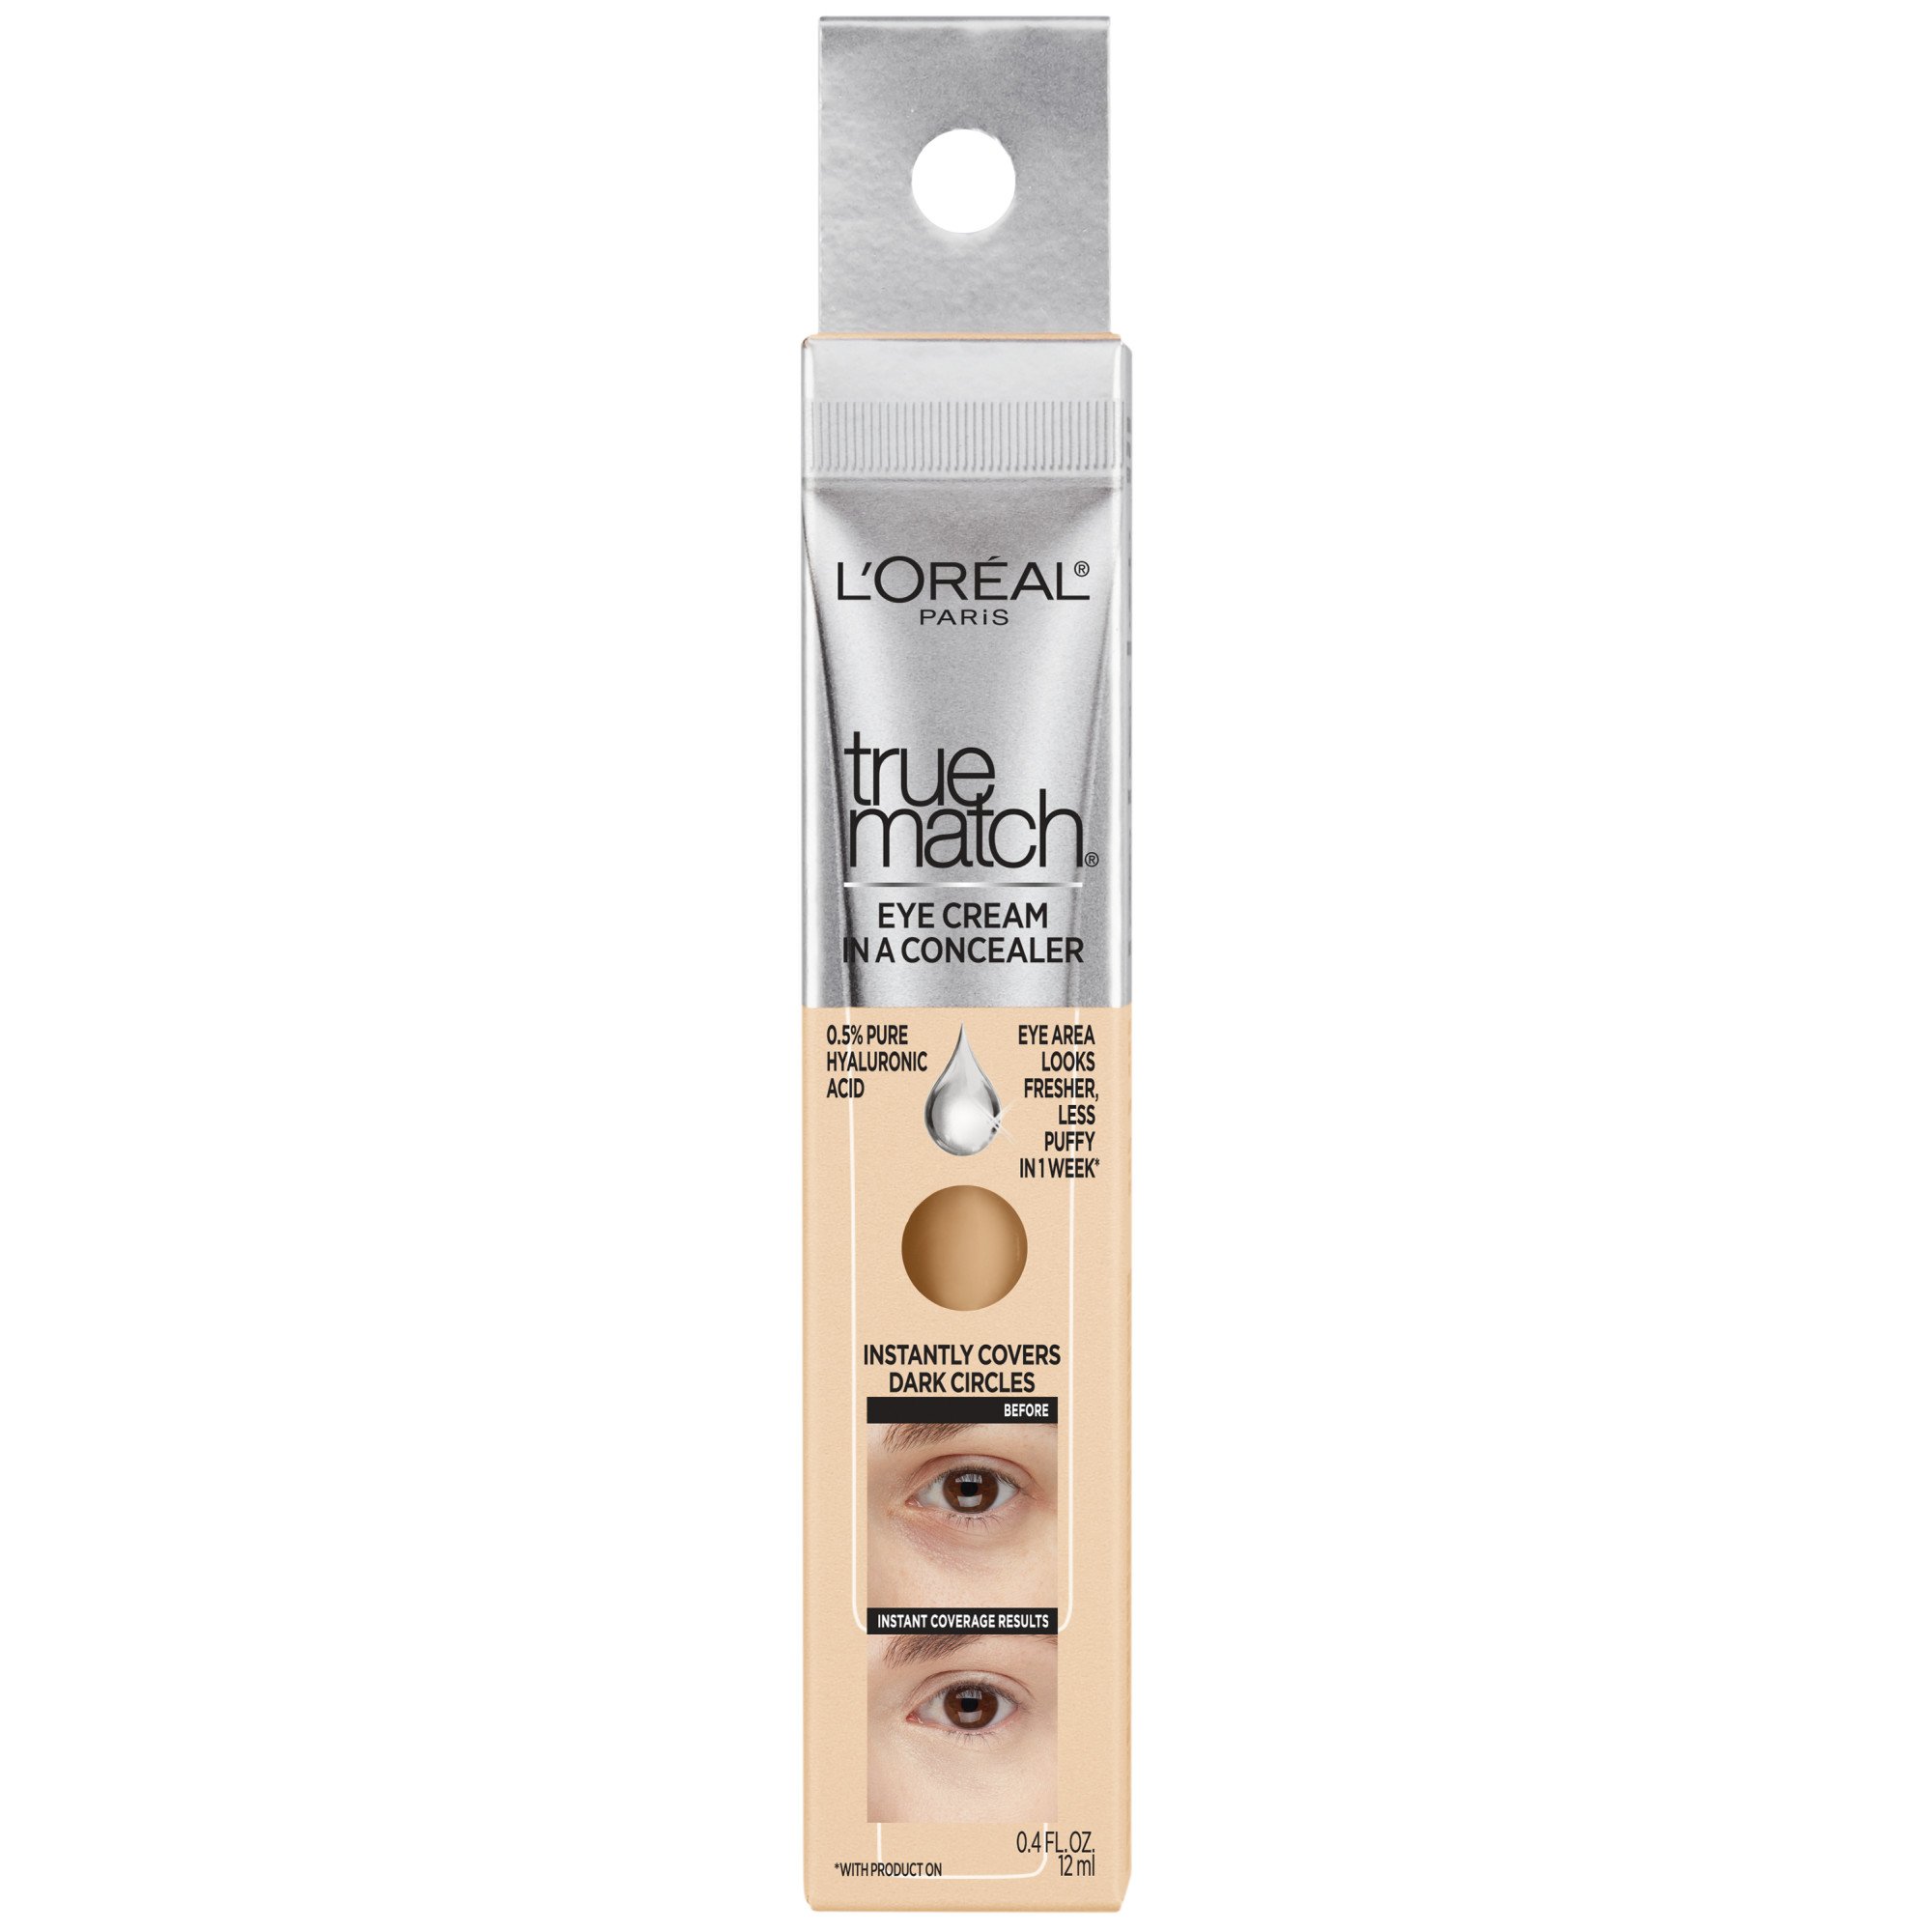 Paris True Match Eye Cream in a Concealer 0.5 percent hyaluronic acid - Shop Concealer & Corrector at H-E-B